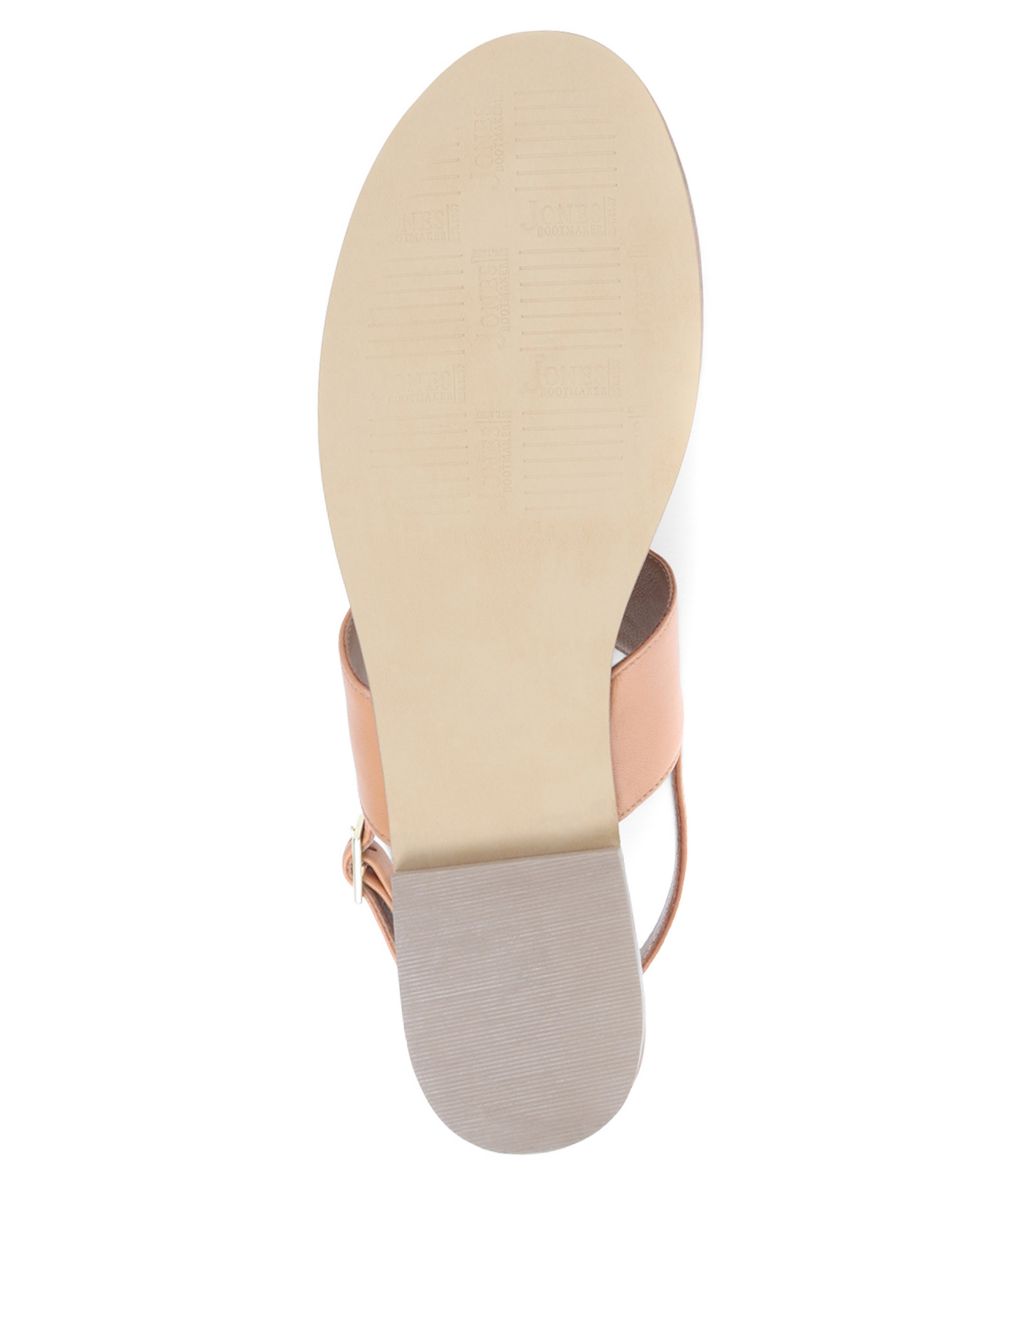 Leather Tassel Toe Thong Sandals image 5